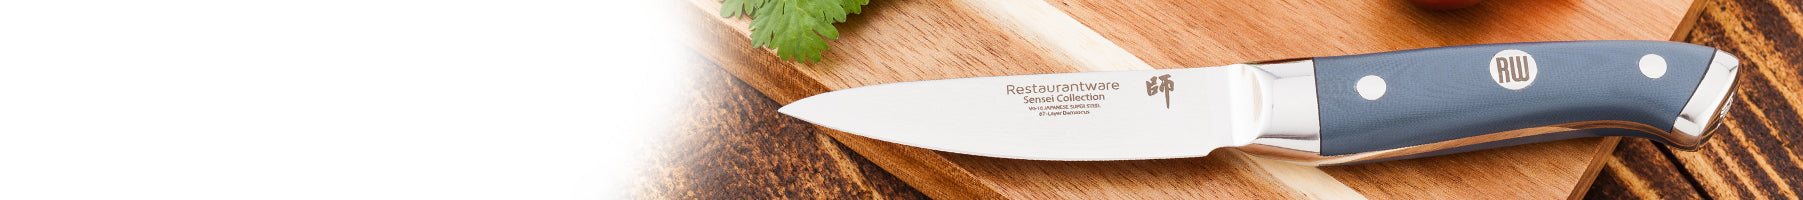 Banner_Smallwares_Kitchen-Knives-Cutlery_Paring-Knives_238